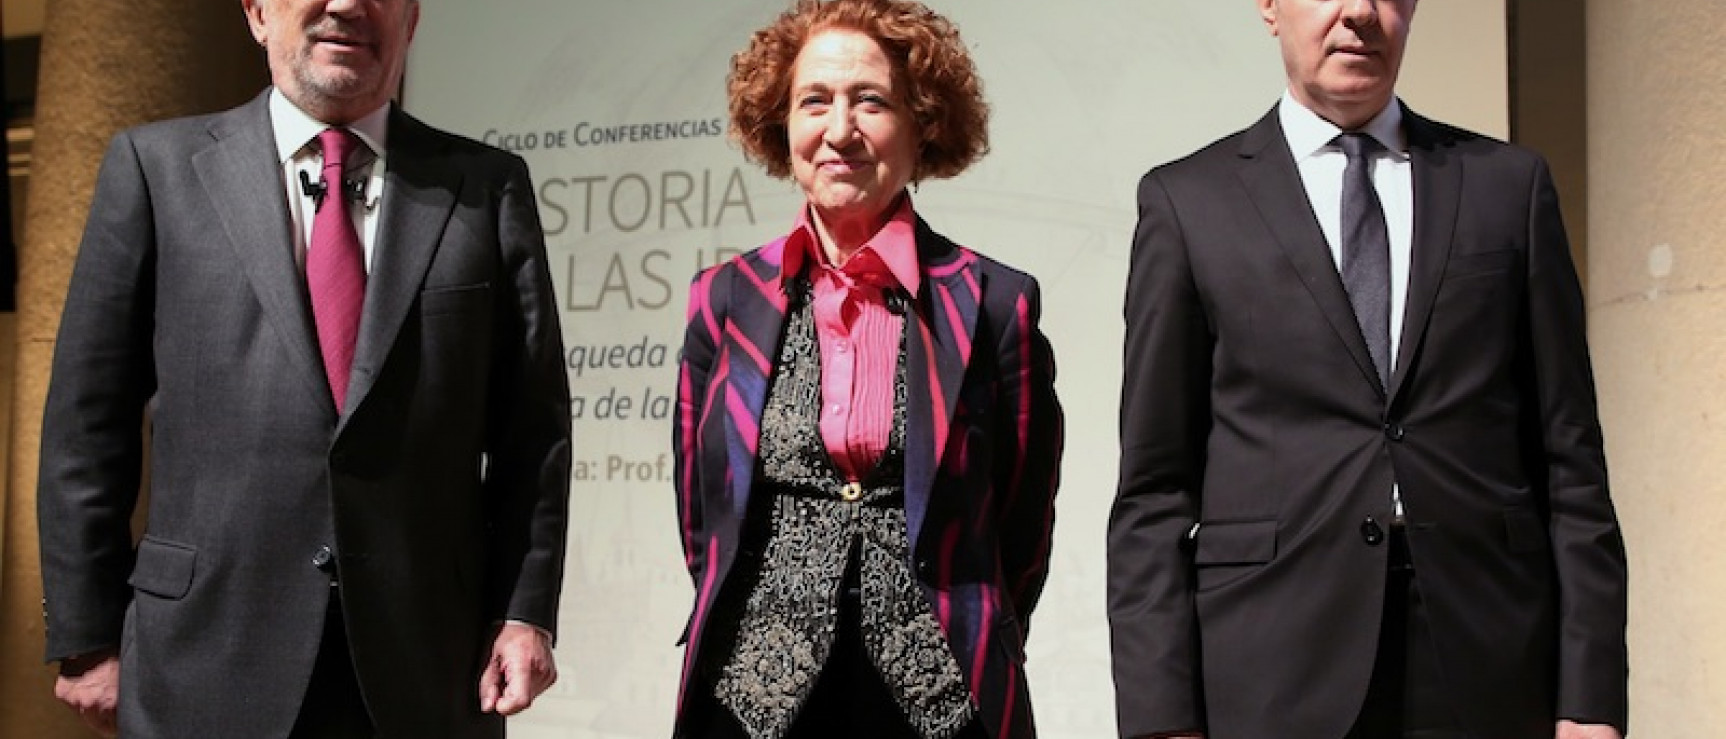 De izquierda a derecha, Santiago Muñoz Machado, Carmen Iglesias y Rafael Pardo Avellaneda.